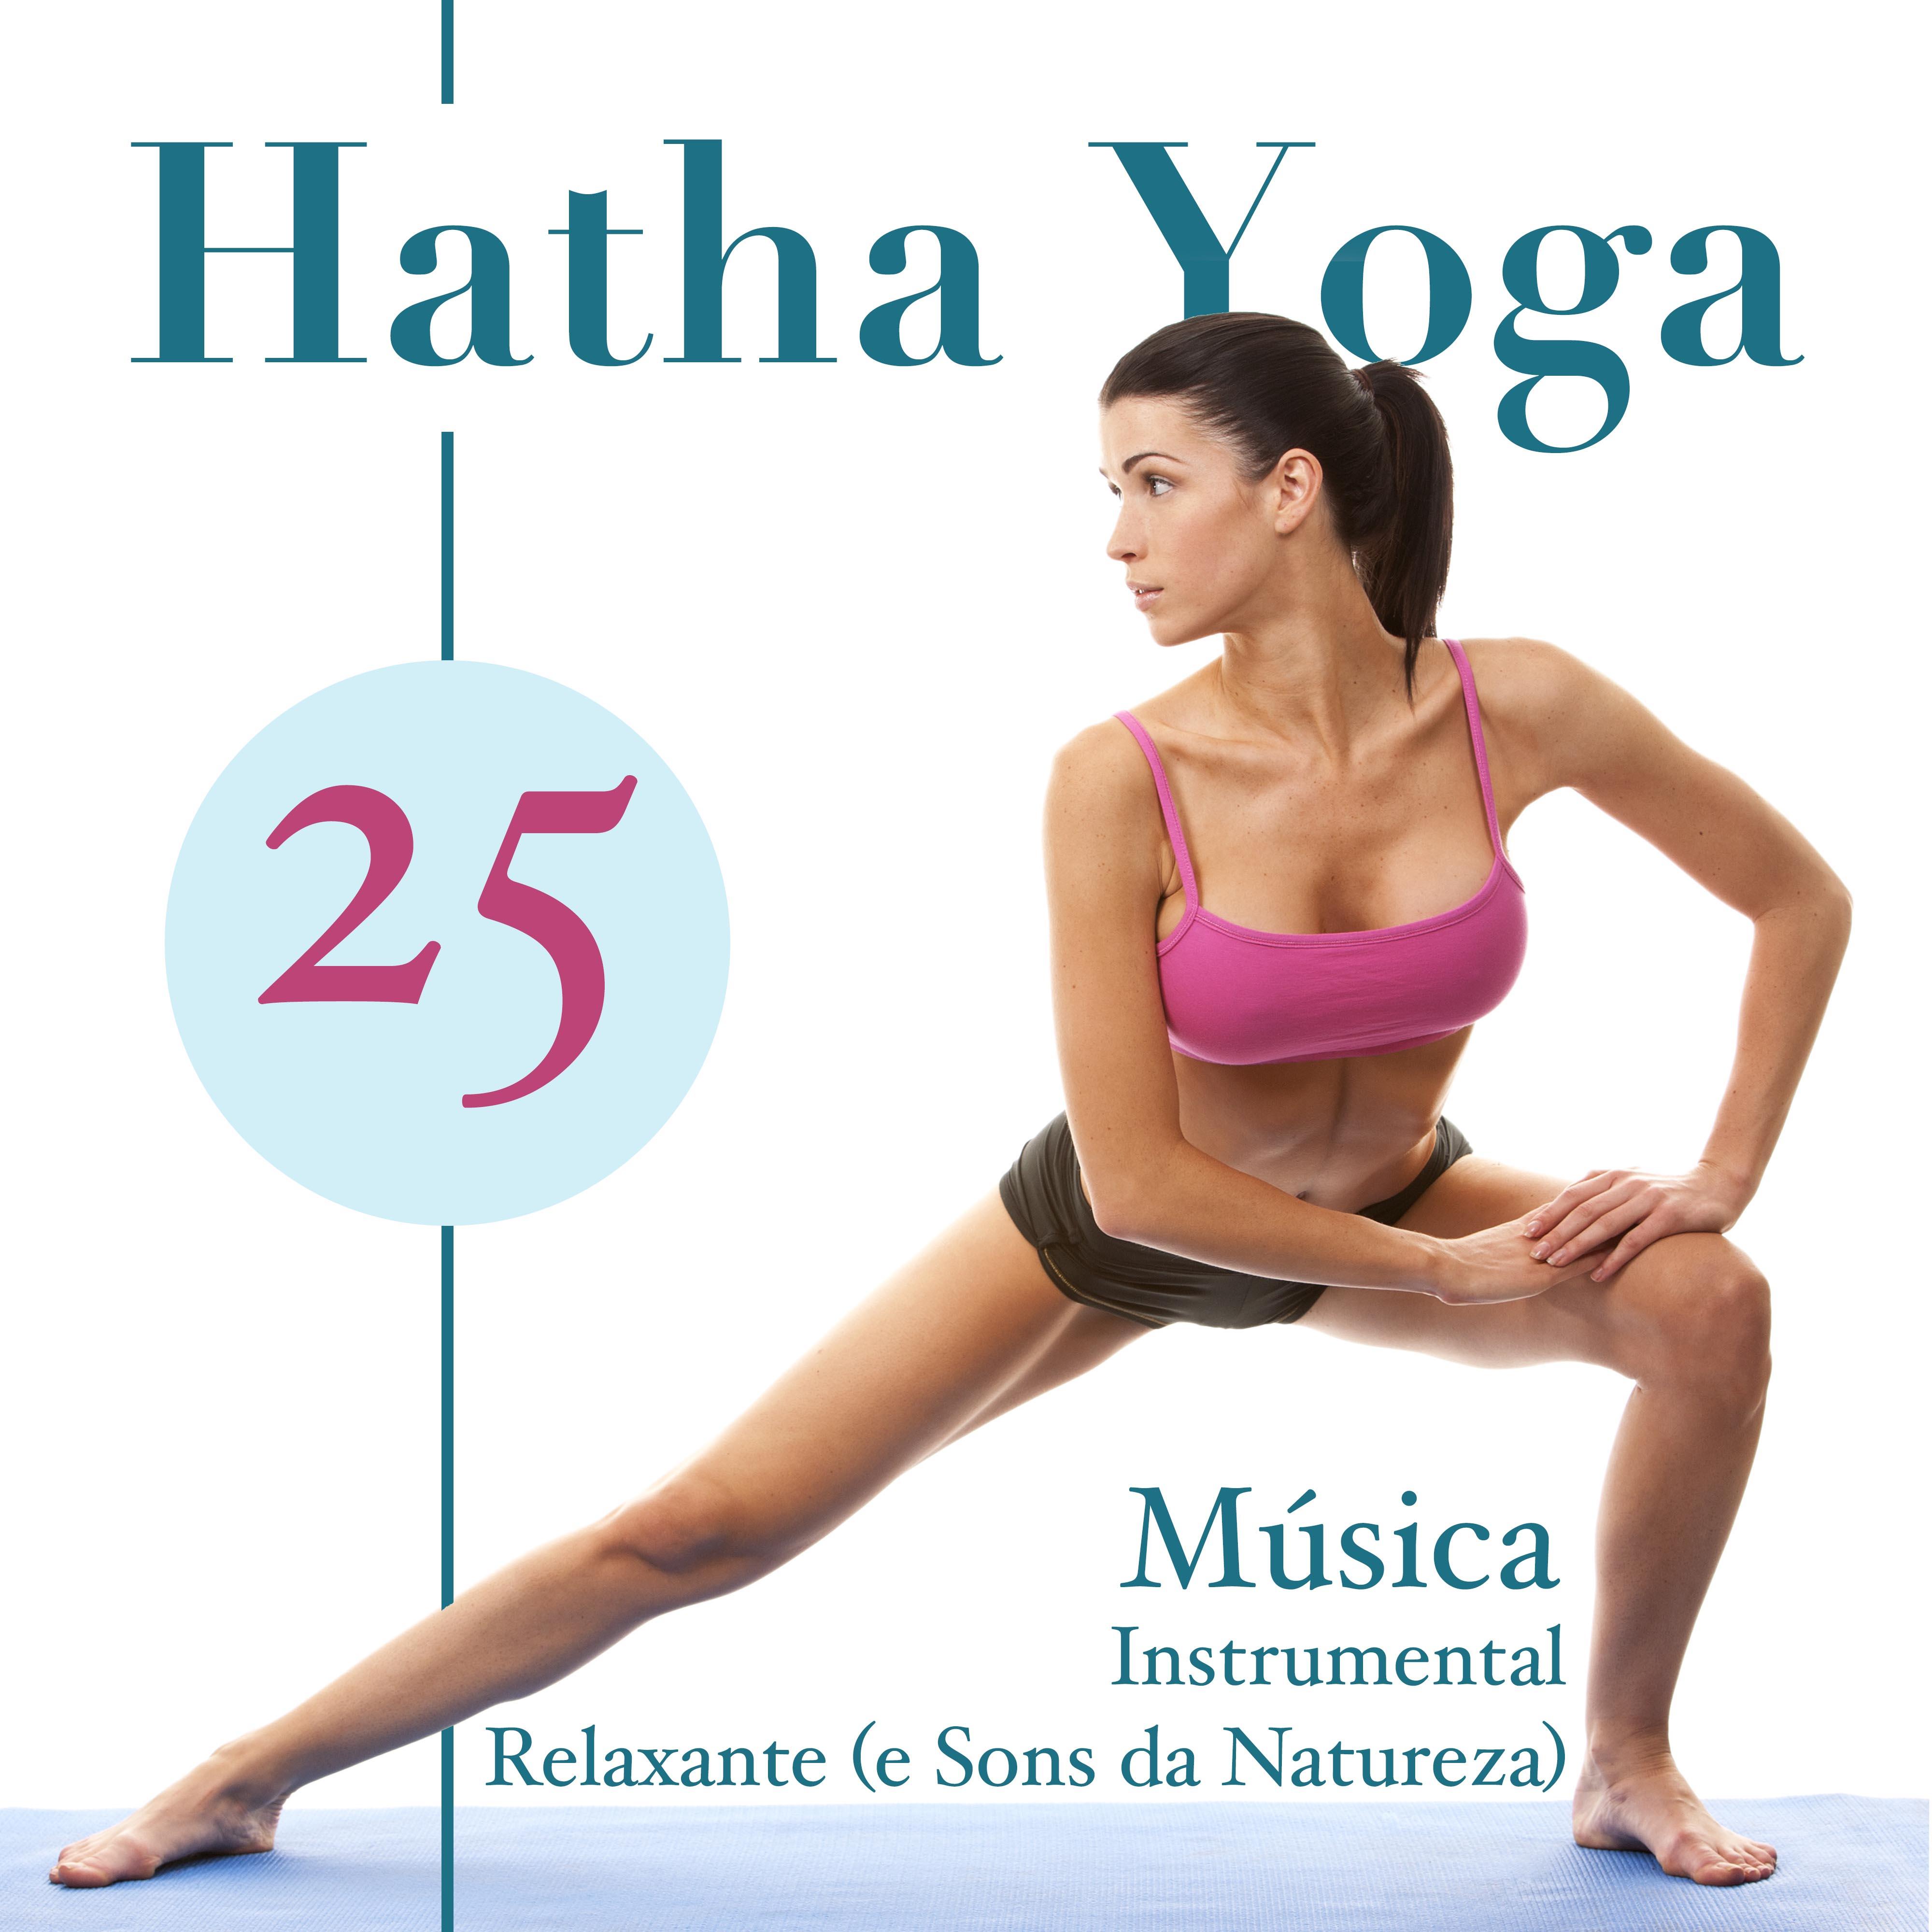 Hatha Yoga  Mu sica Instrumental Relaxante e Sons da Natureza